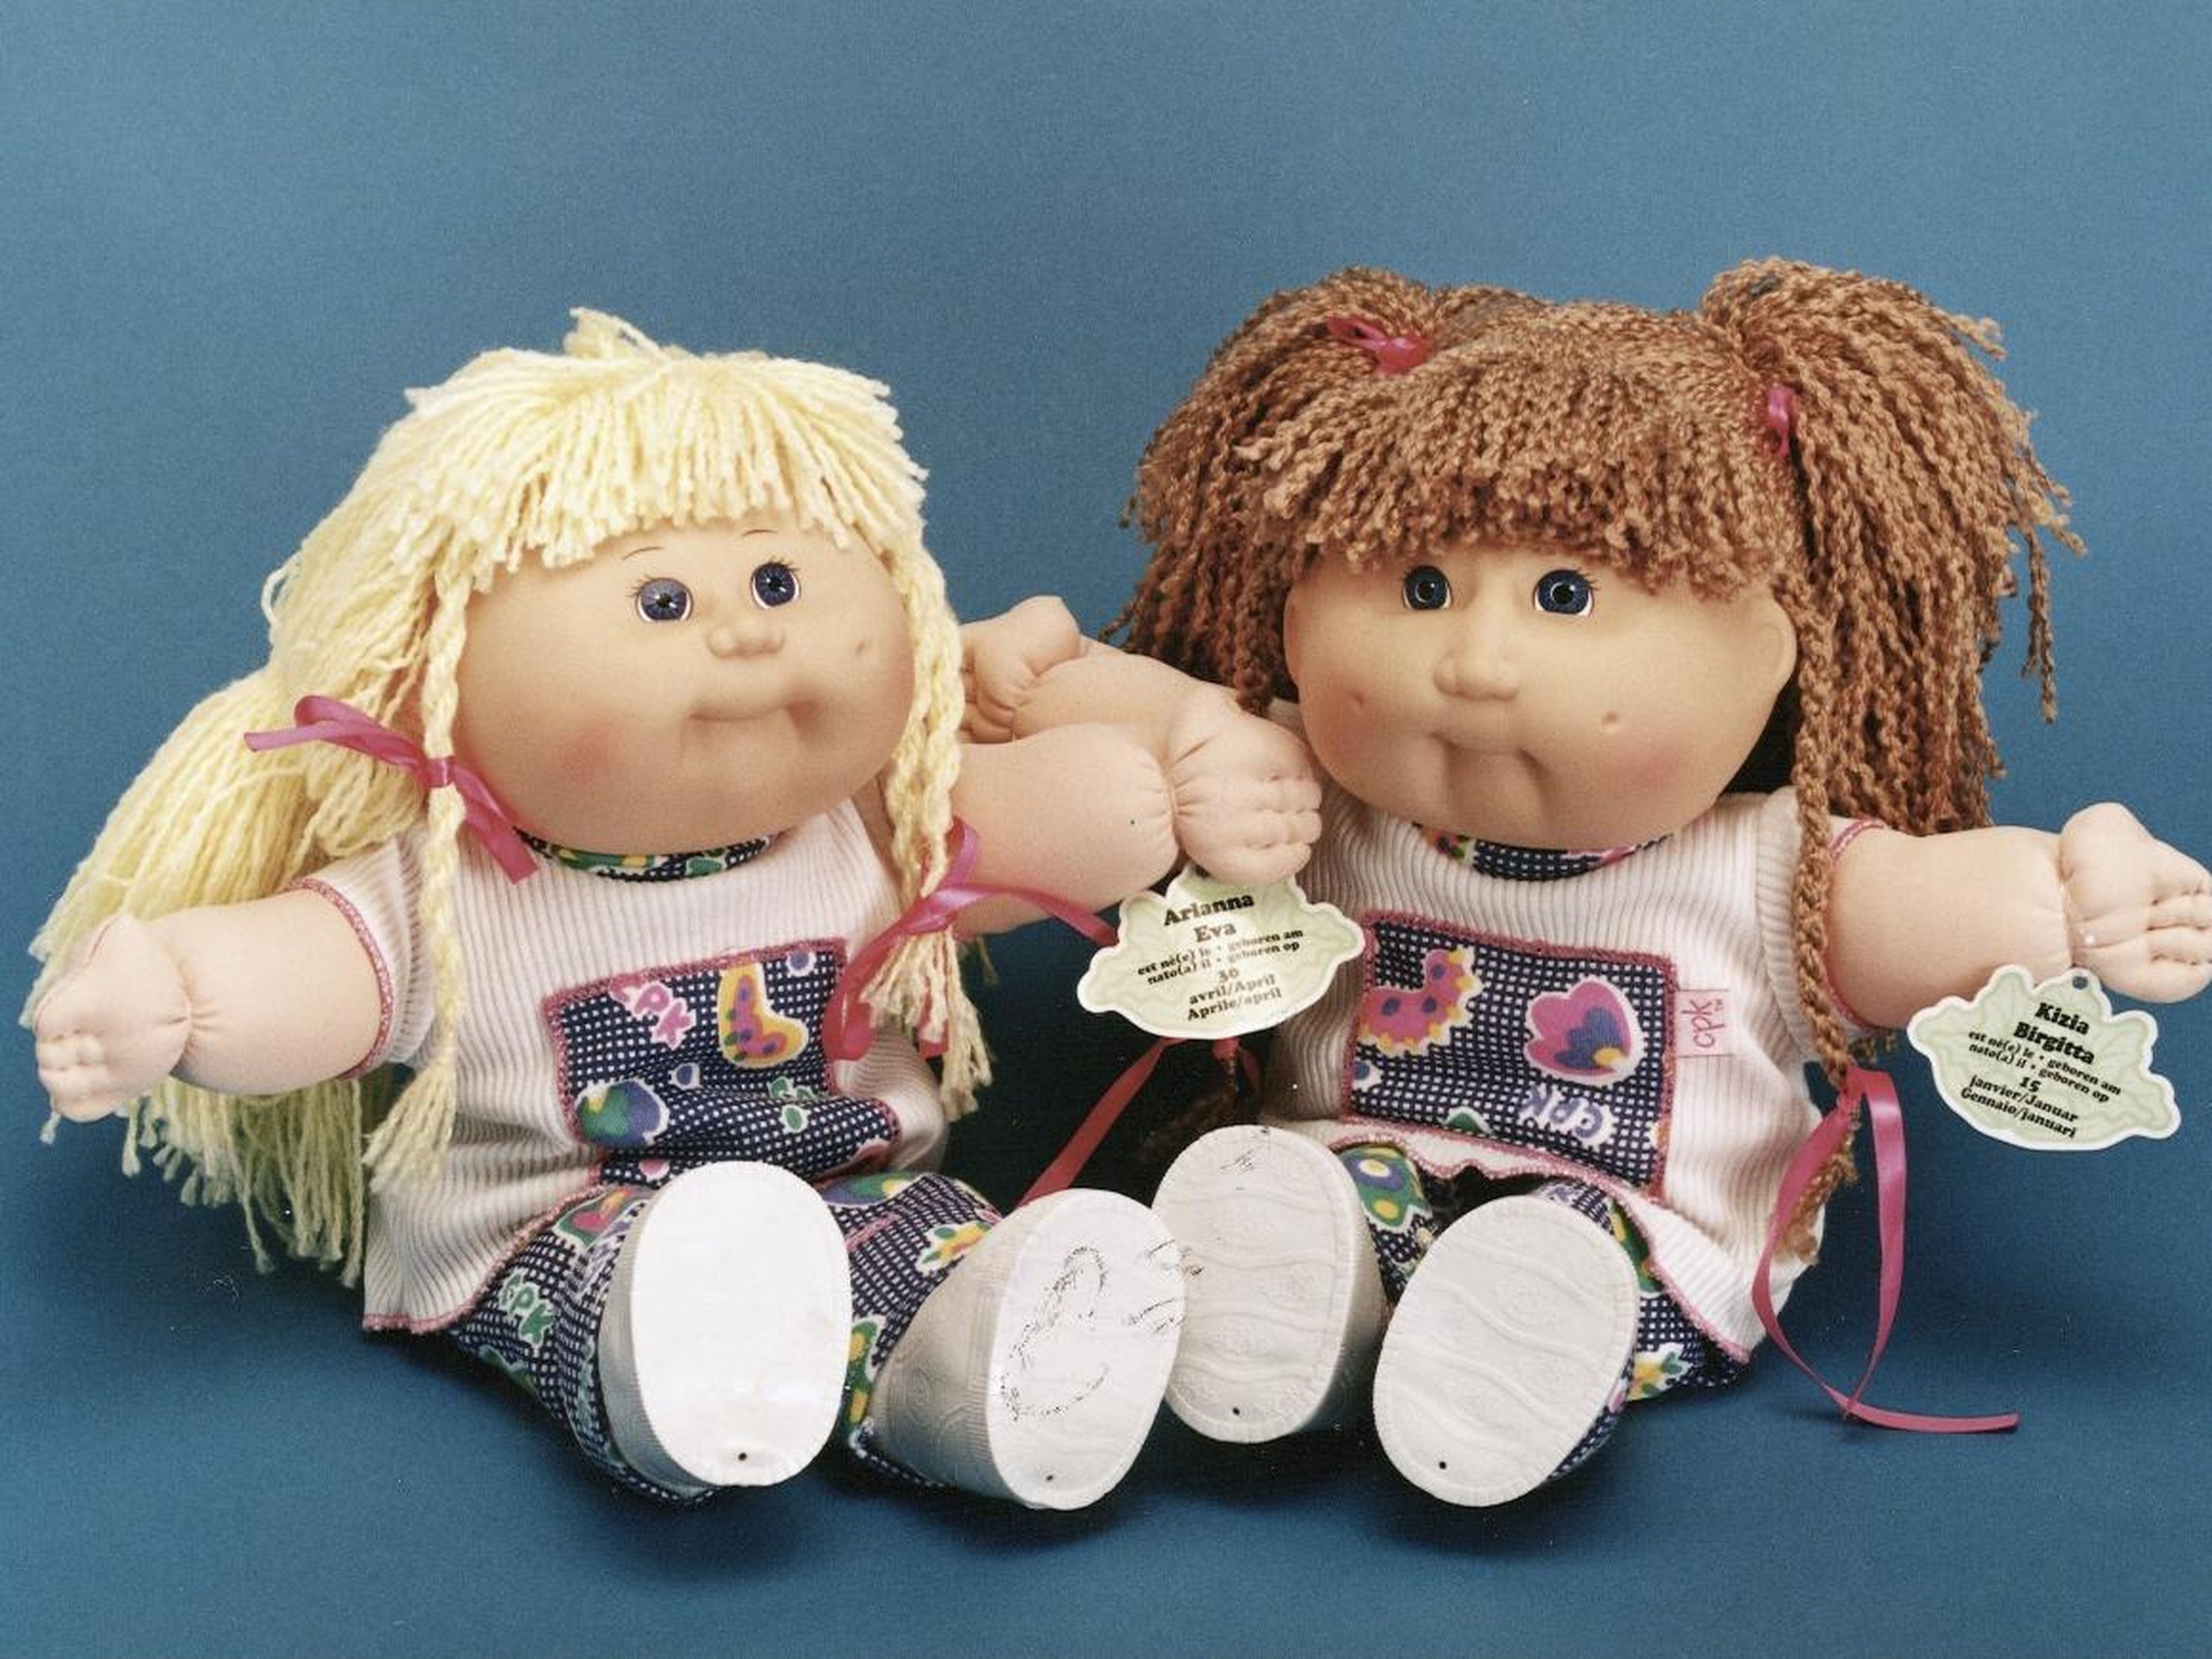 Muñecas de Cabbage Patch Kids.